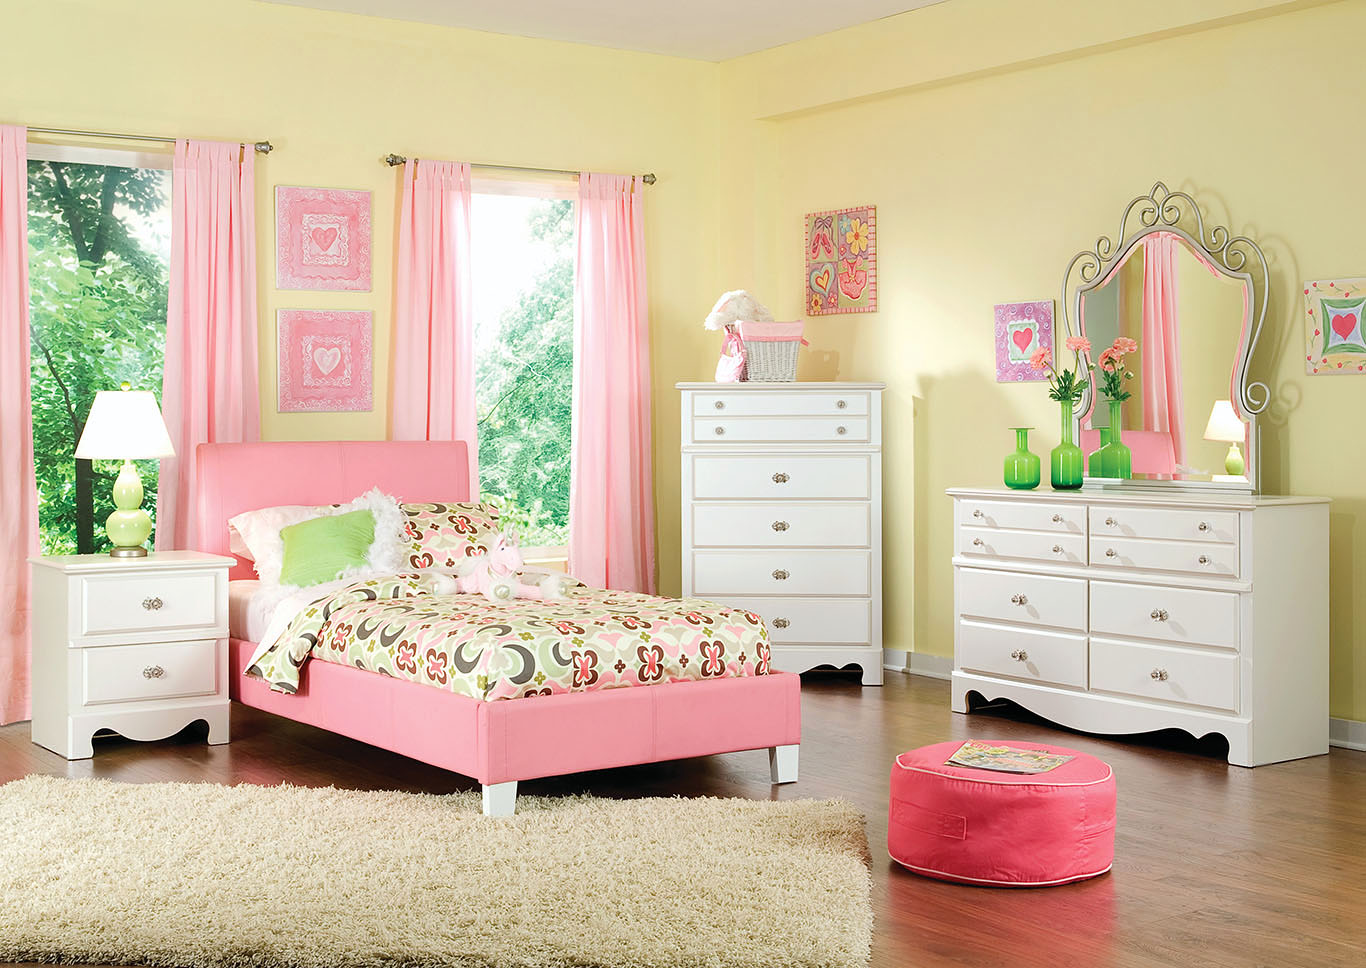 Fantasia Pink Twin Upholstered Bed,Standard